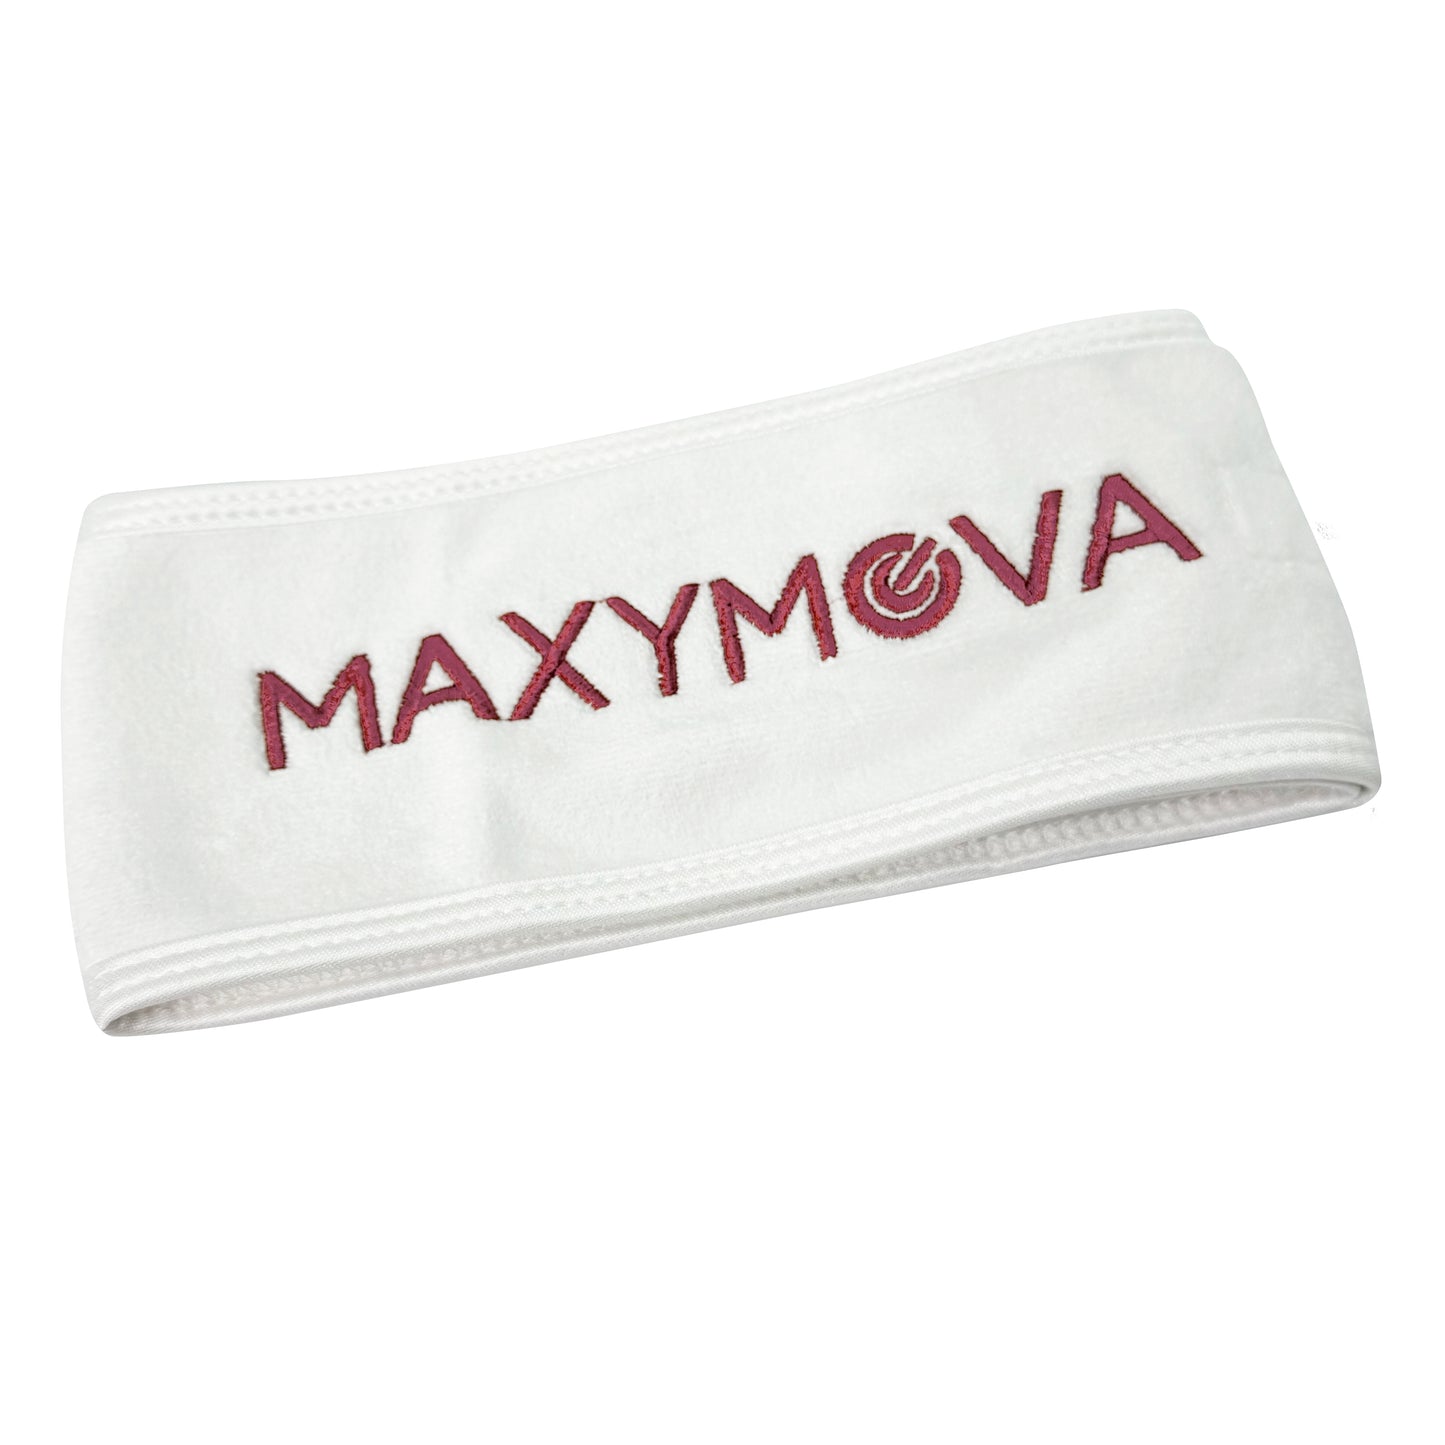 MAXYMOVA Headband - Comfortable, Soft Sponge Material for Beauty Routines